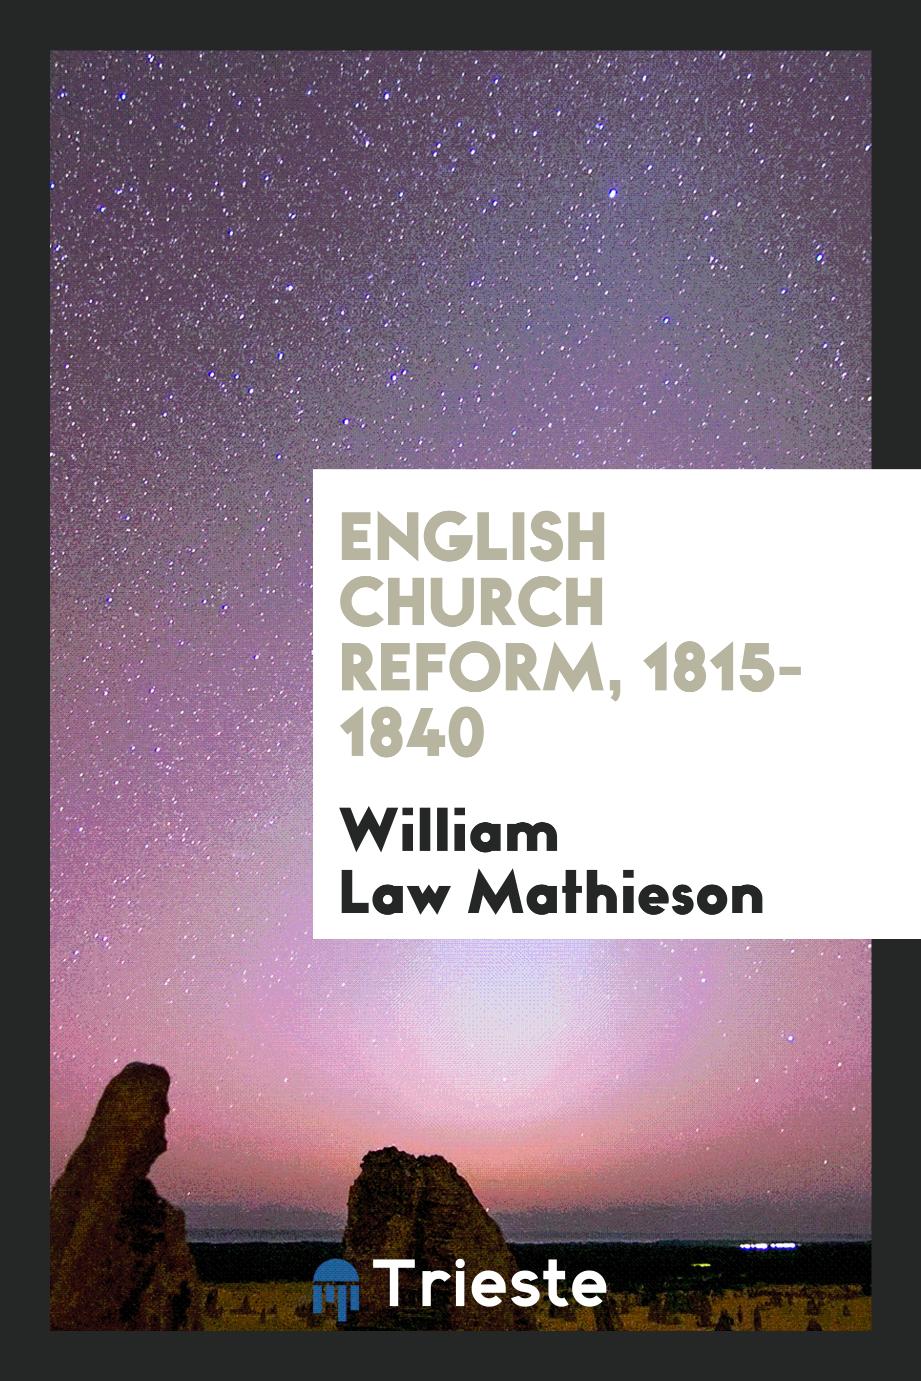 English church reform, 1815-1840